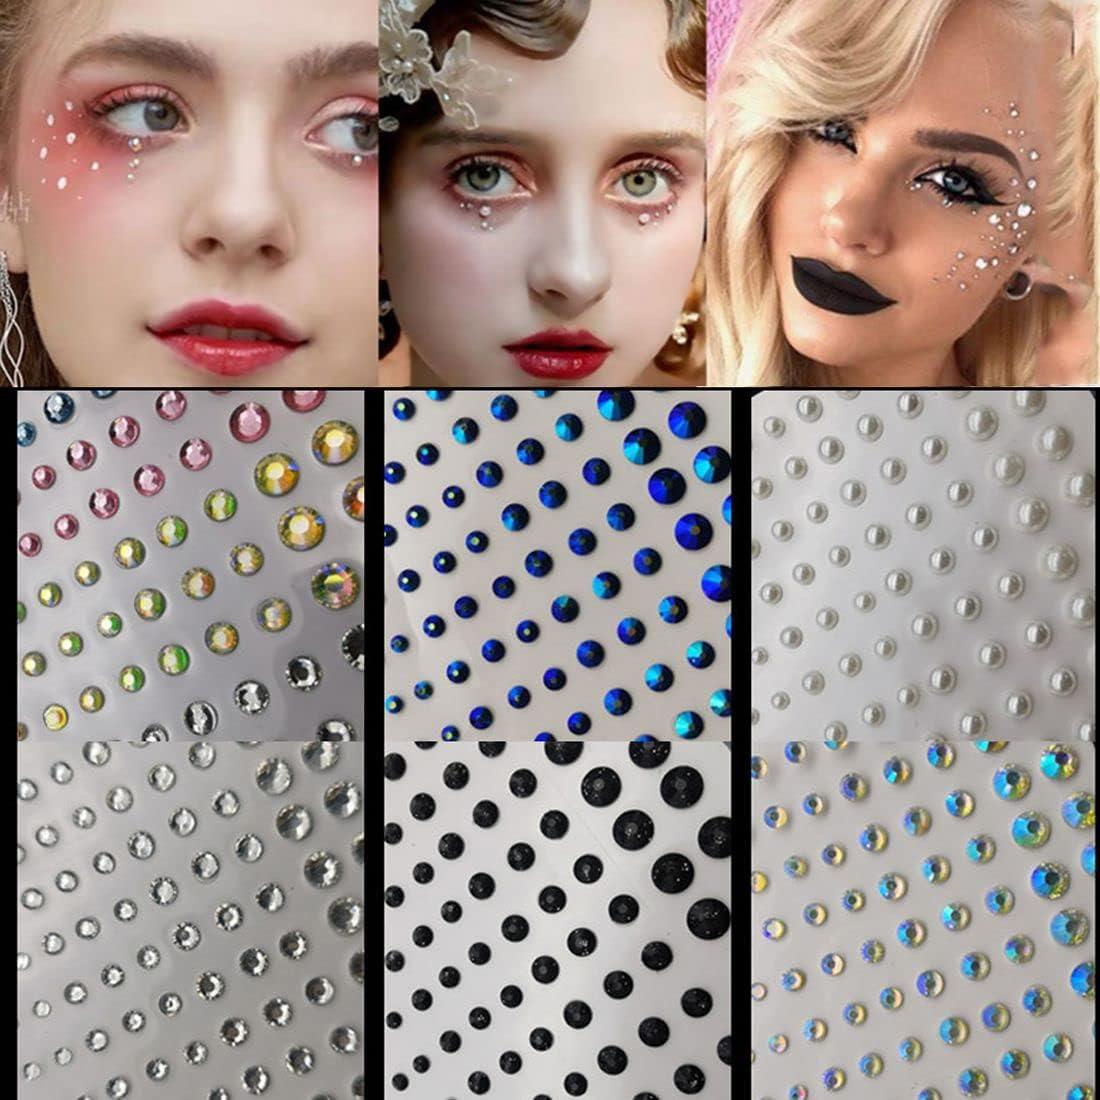 New 3D Rhinestone Face Sticker for Children Face Gems Jewels